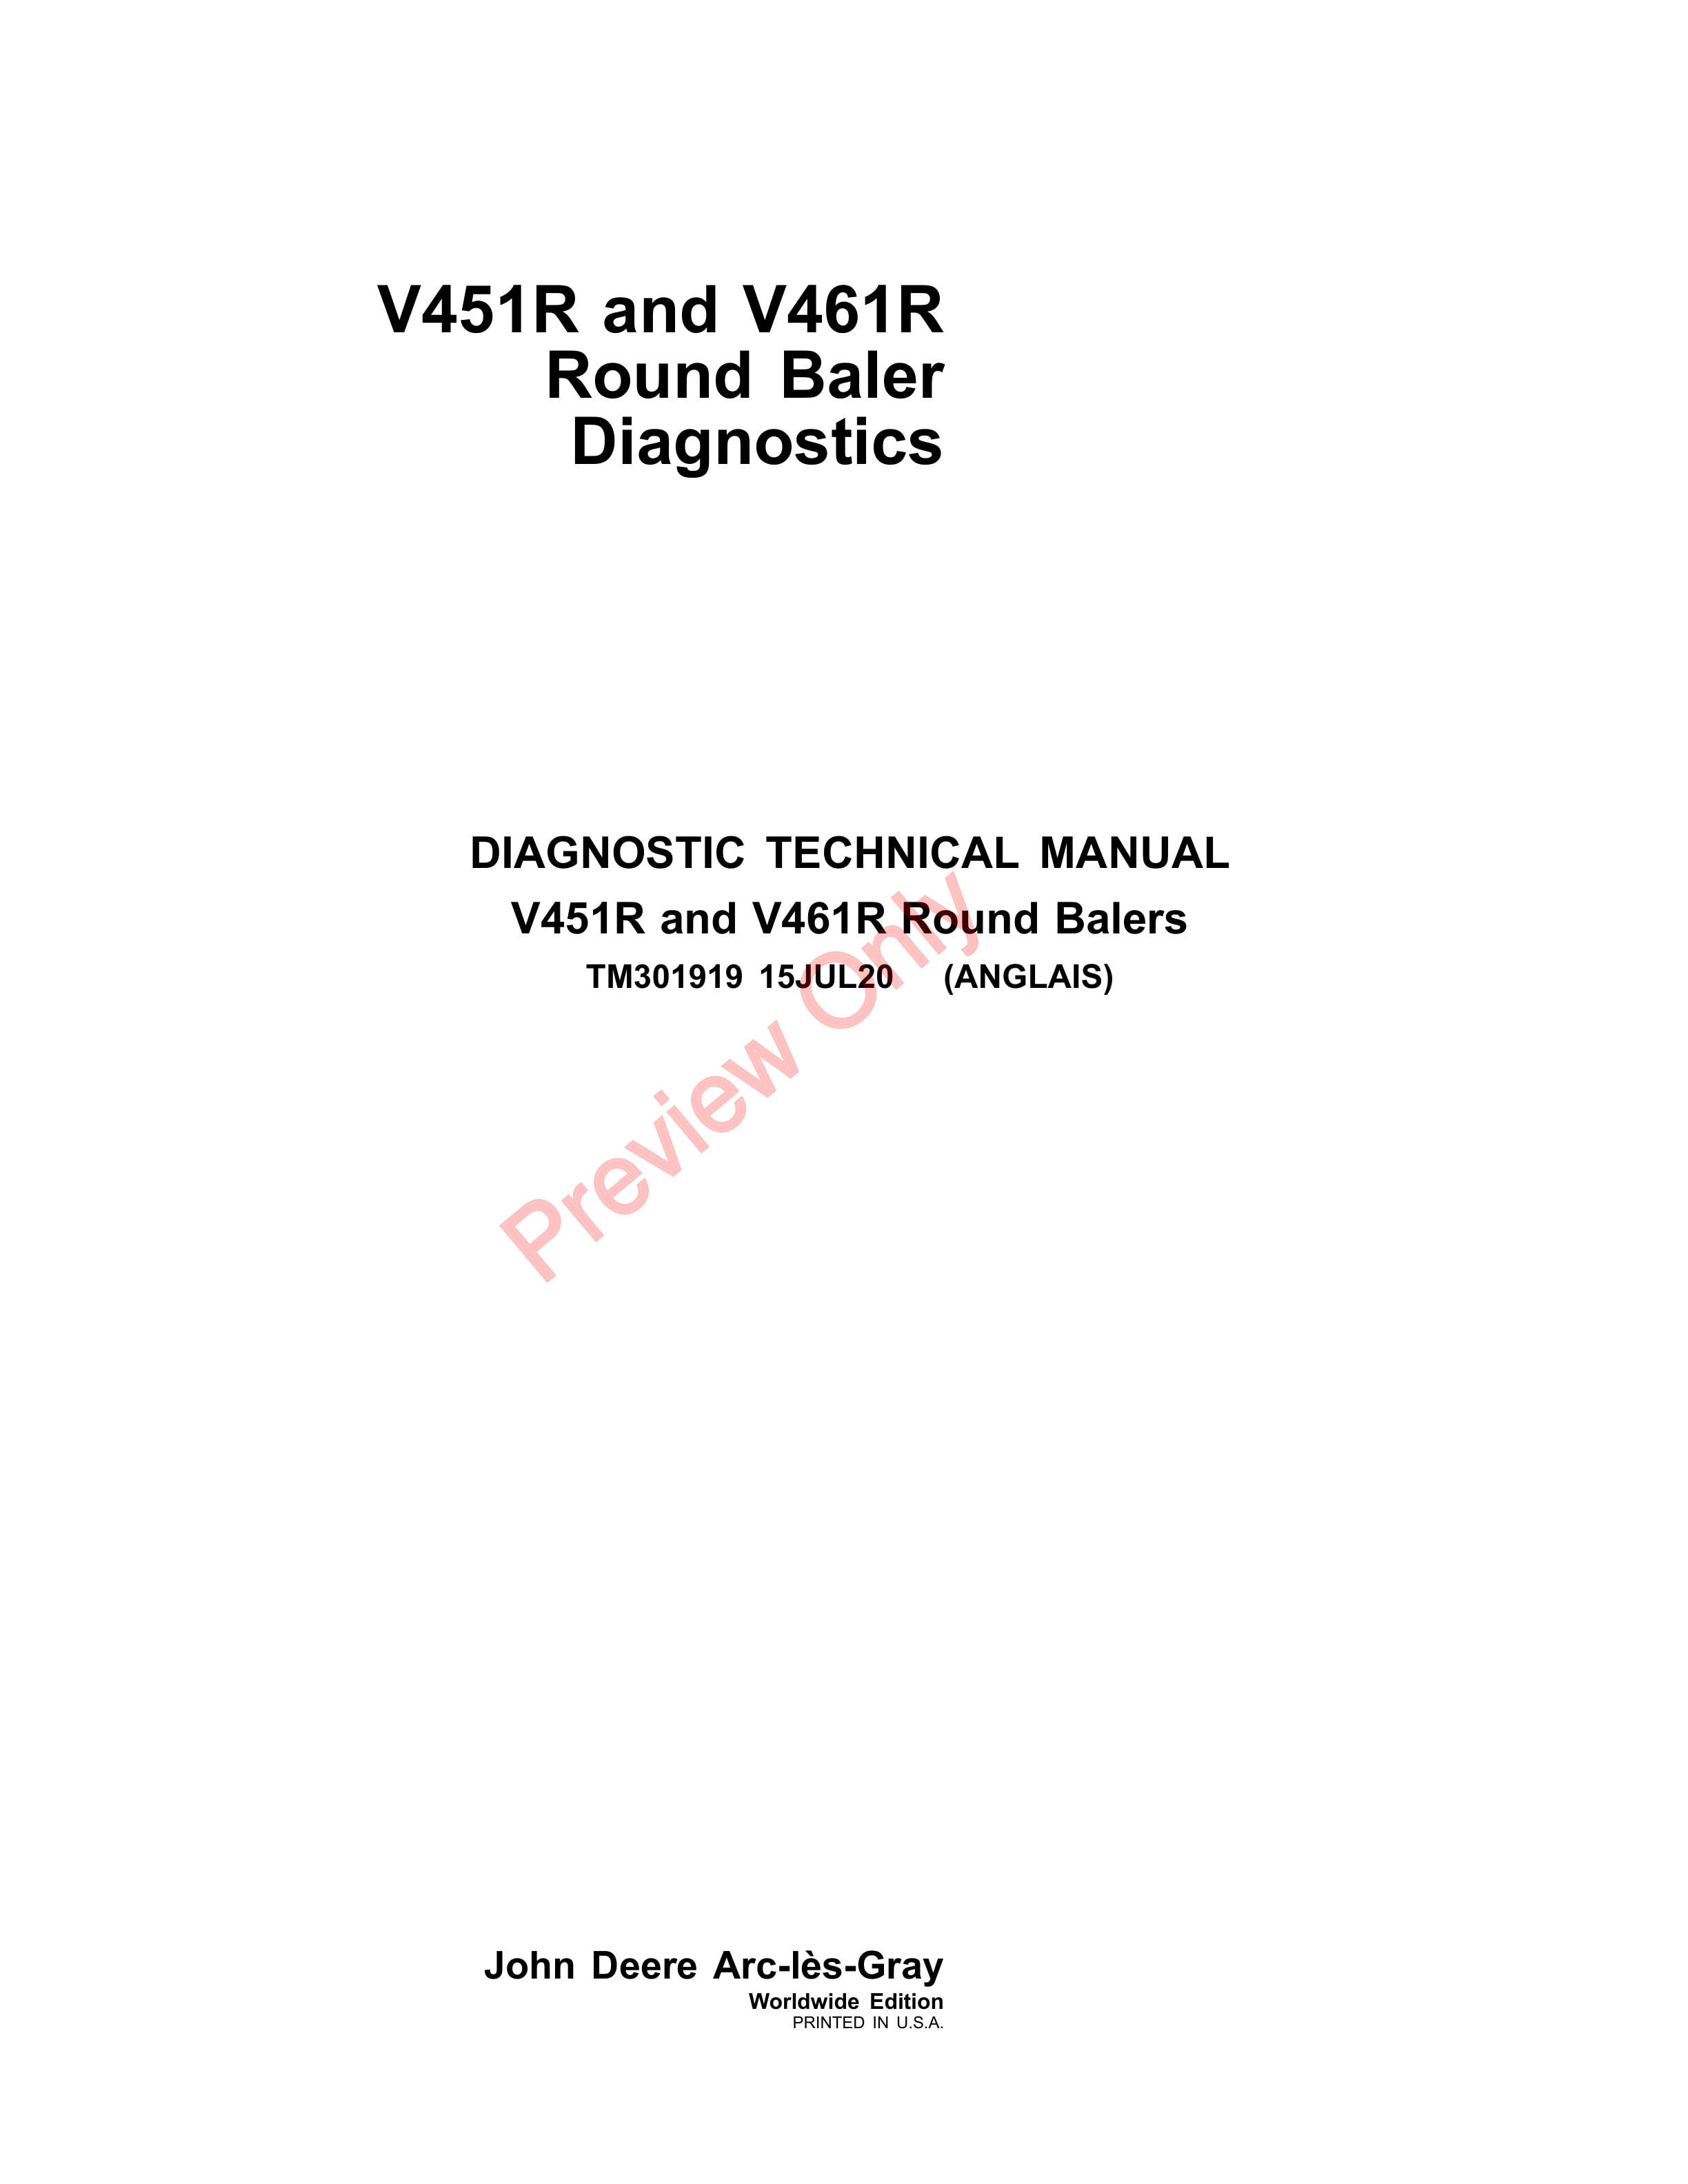 John Deere V451R and V461R Round Balers Technical Manual TM301919 15JUL20 1